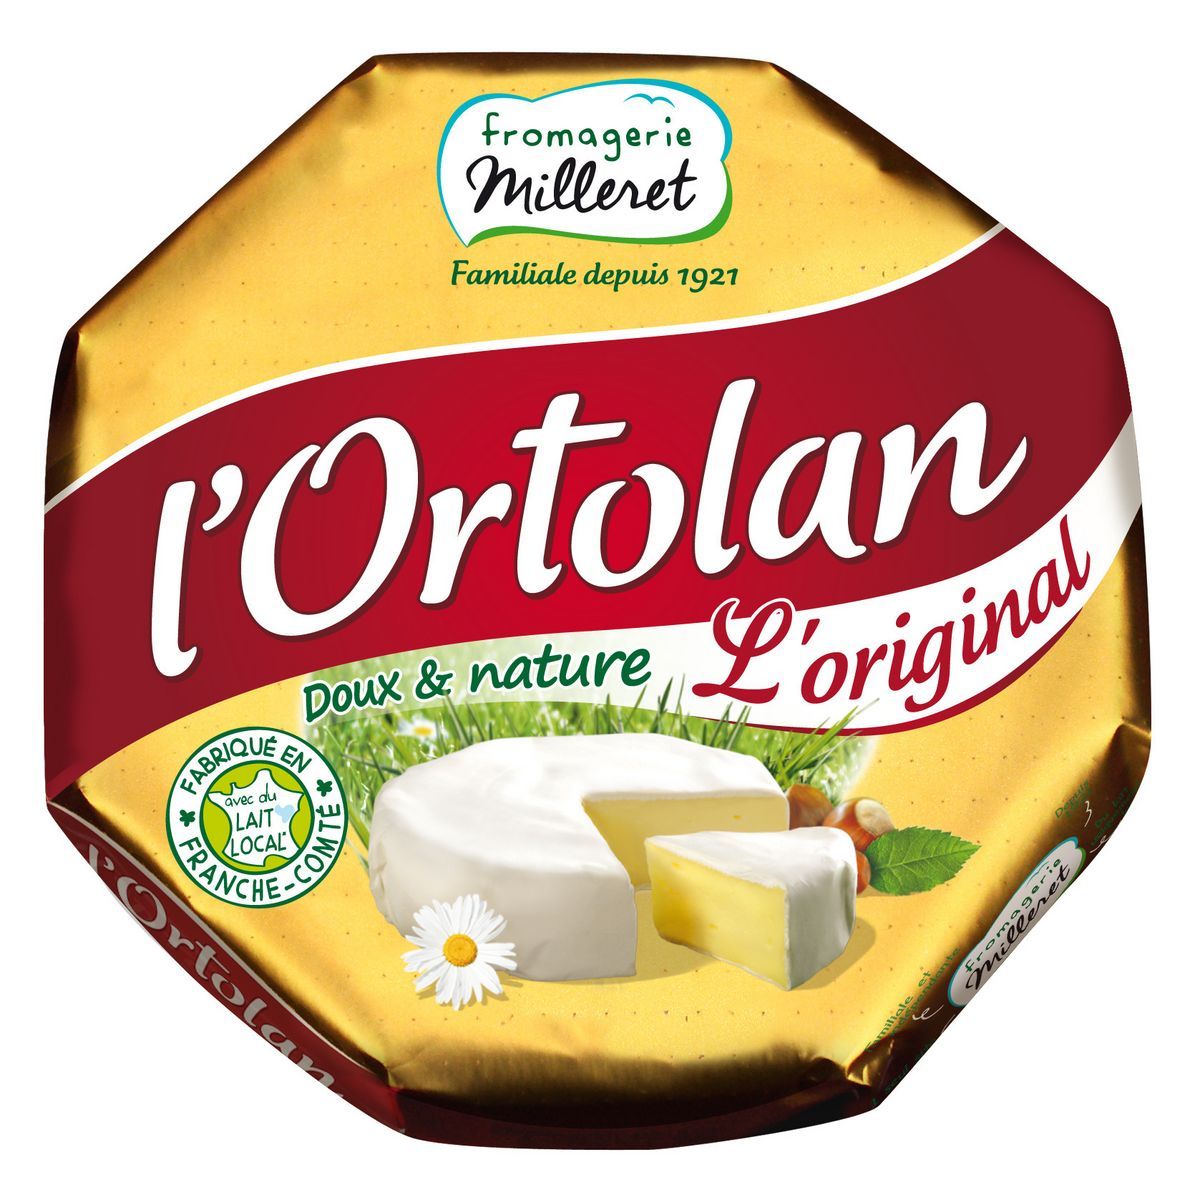 L'Ortolan